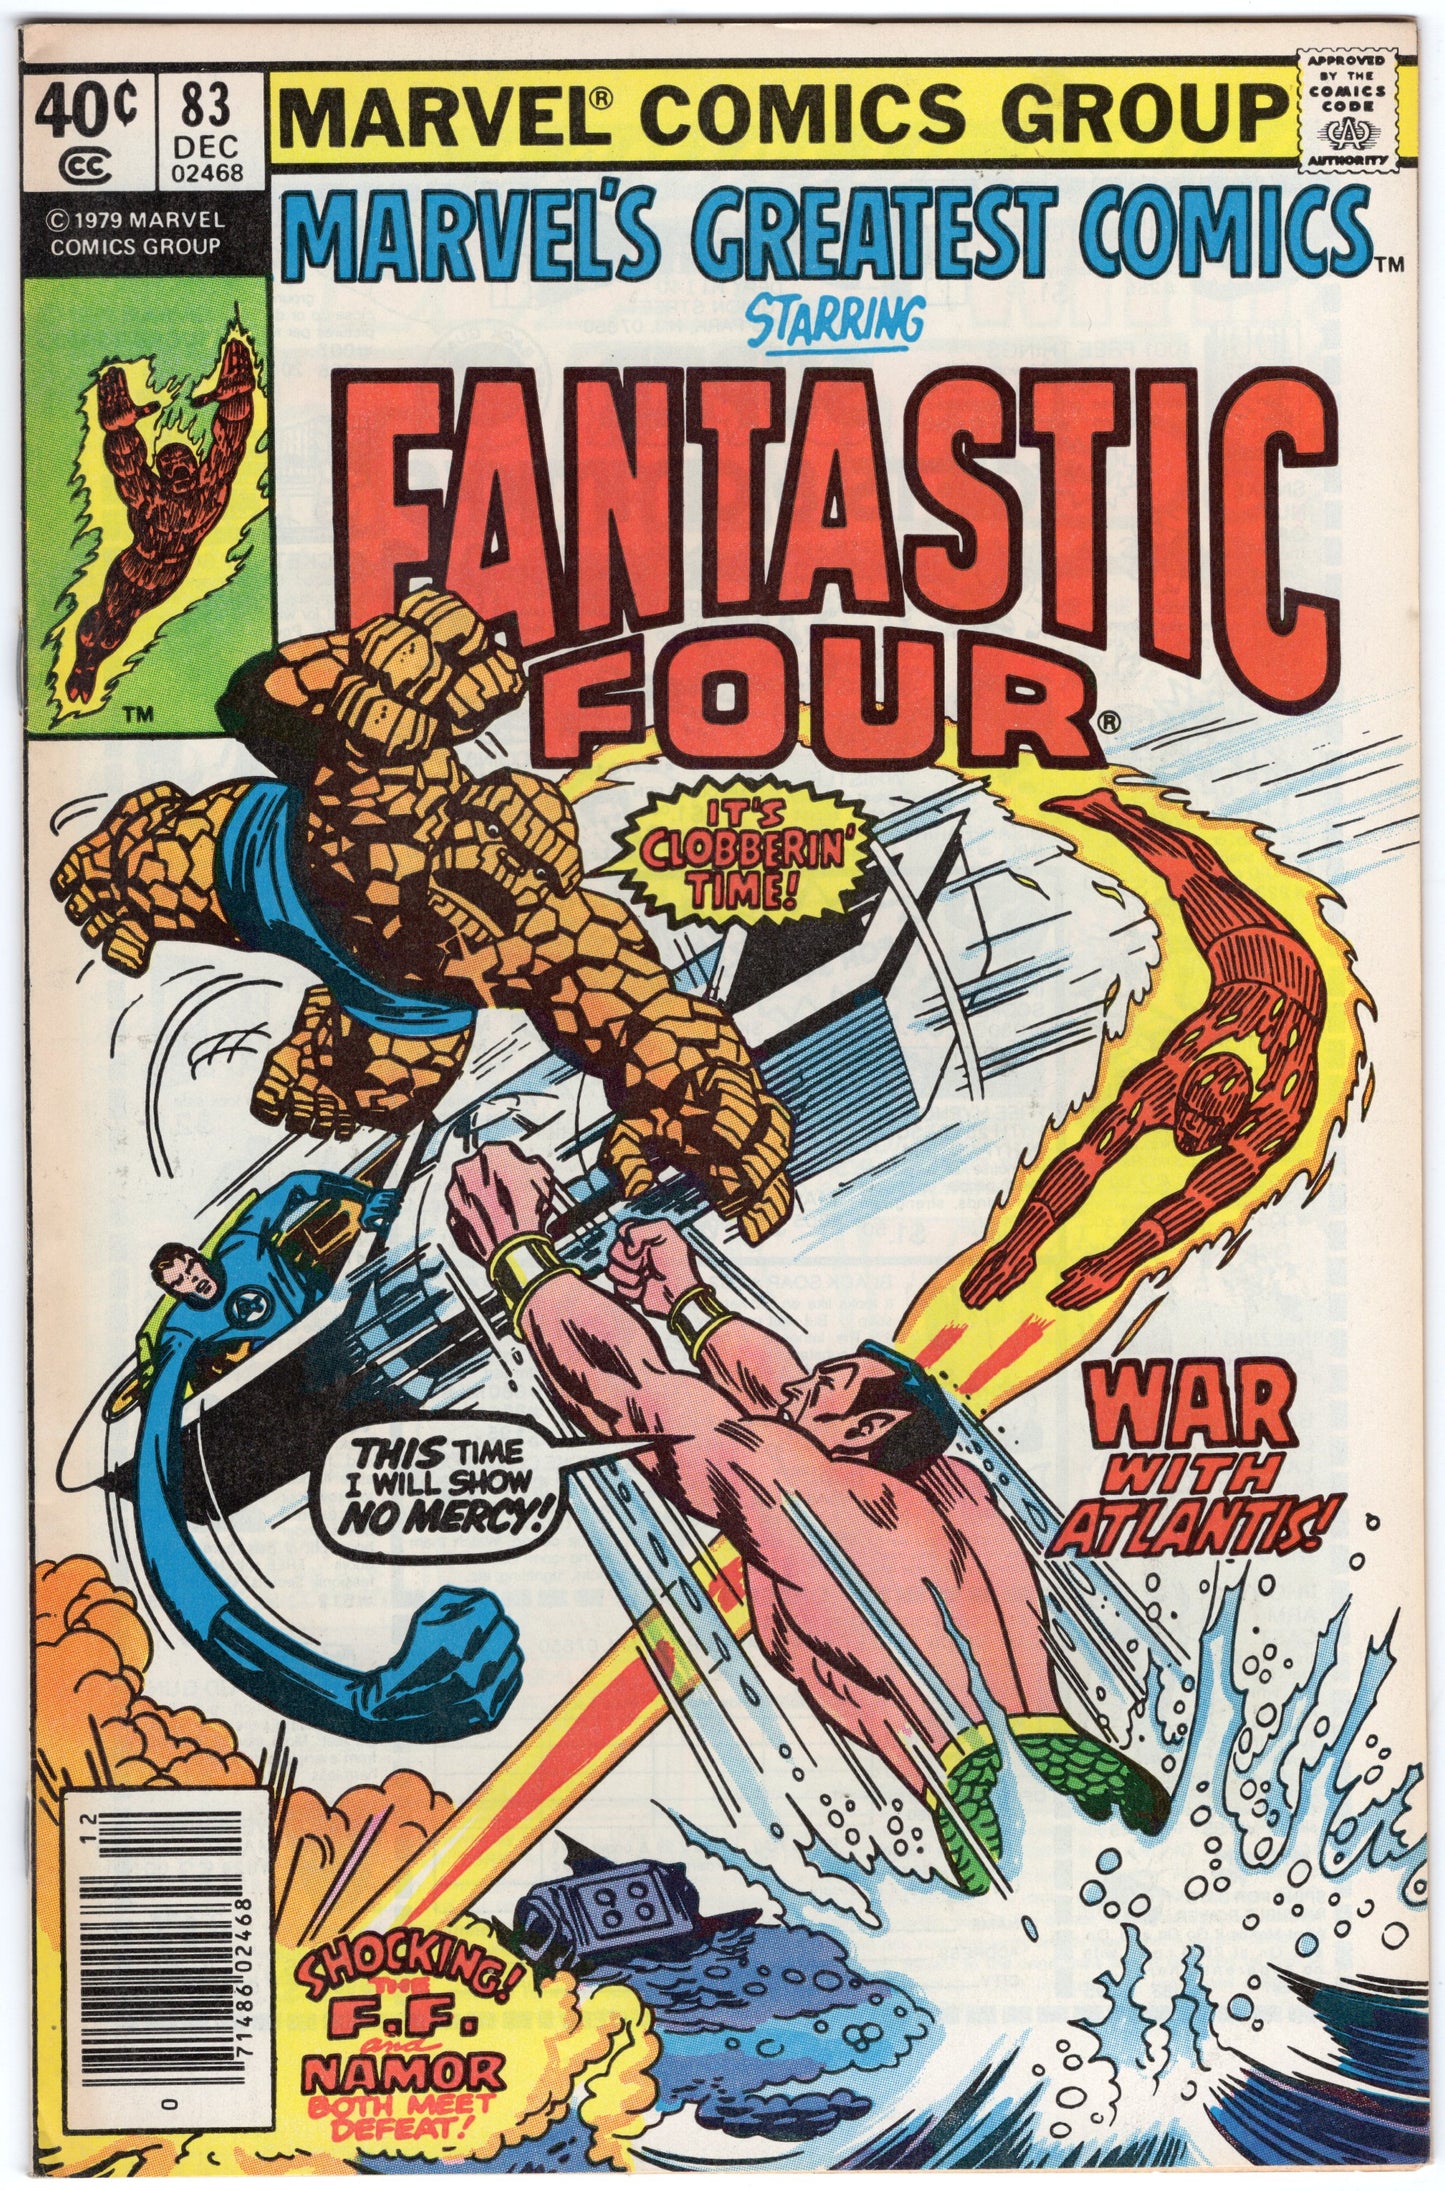 Marvel's Greatest Comics "Starring Fantastic Four" #83 (Dec. 1979 - Marvel Comics) FN/VF